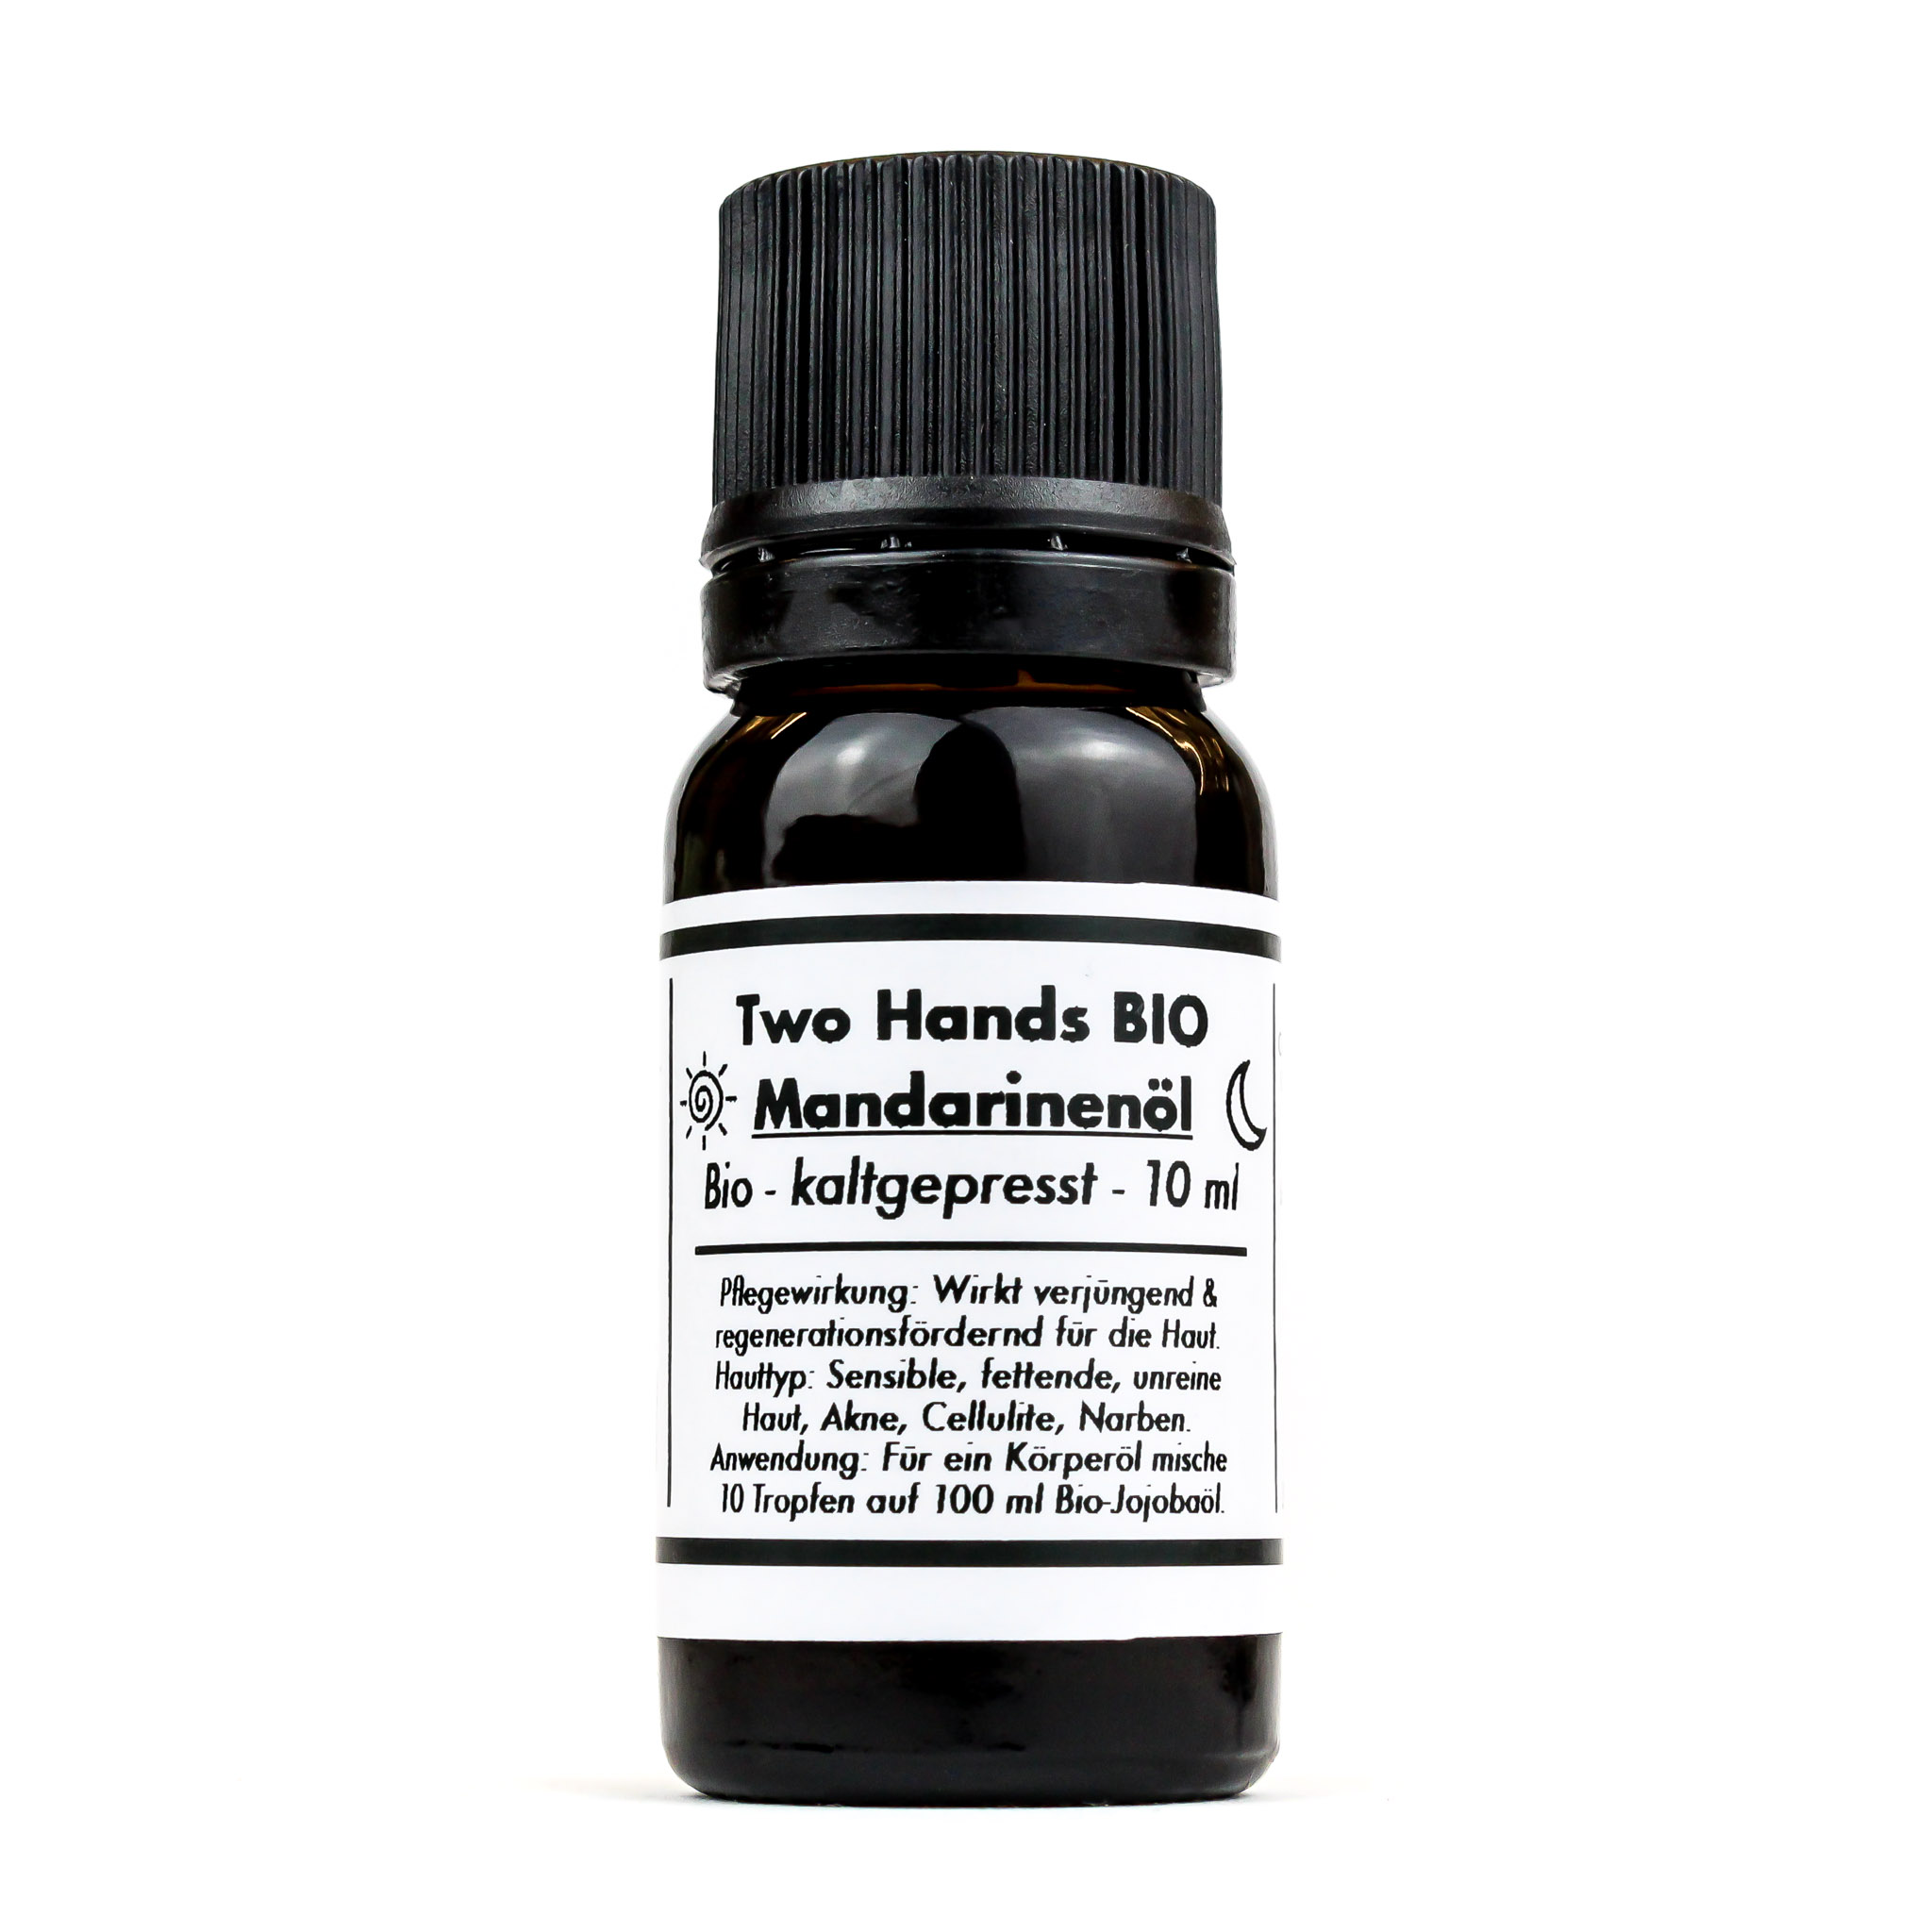 Mandarinenöl - Bio - Vegan - Kaltgepresst - 10 ml